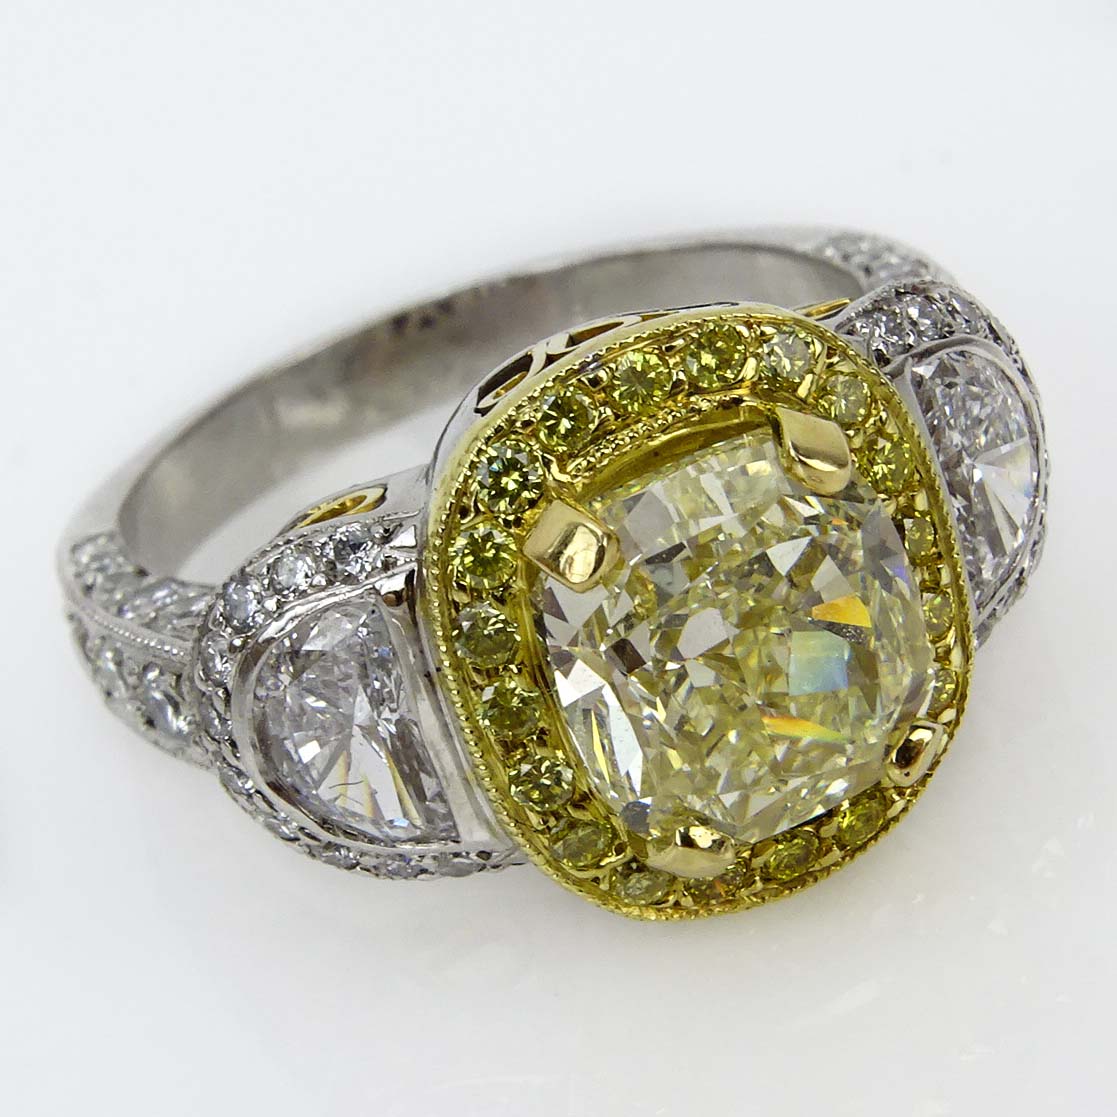 Approx. 5.10 Carat TW Diamond and Platinum Engagement Ring.